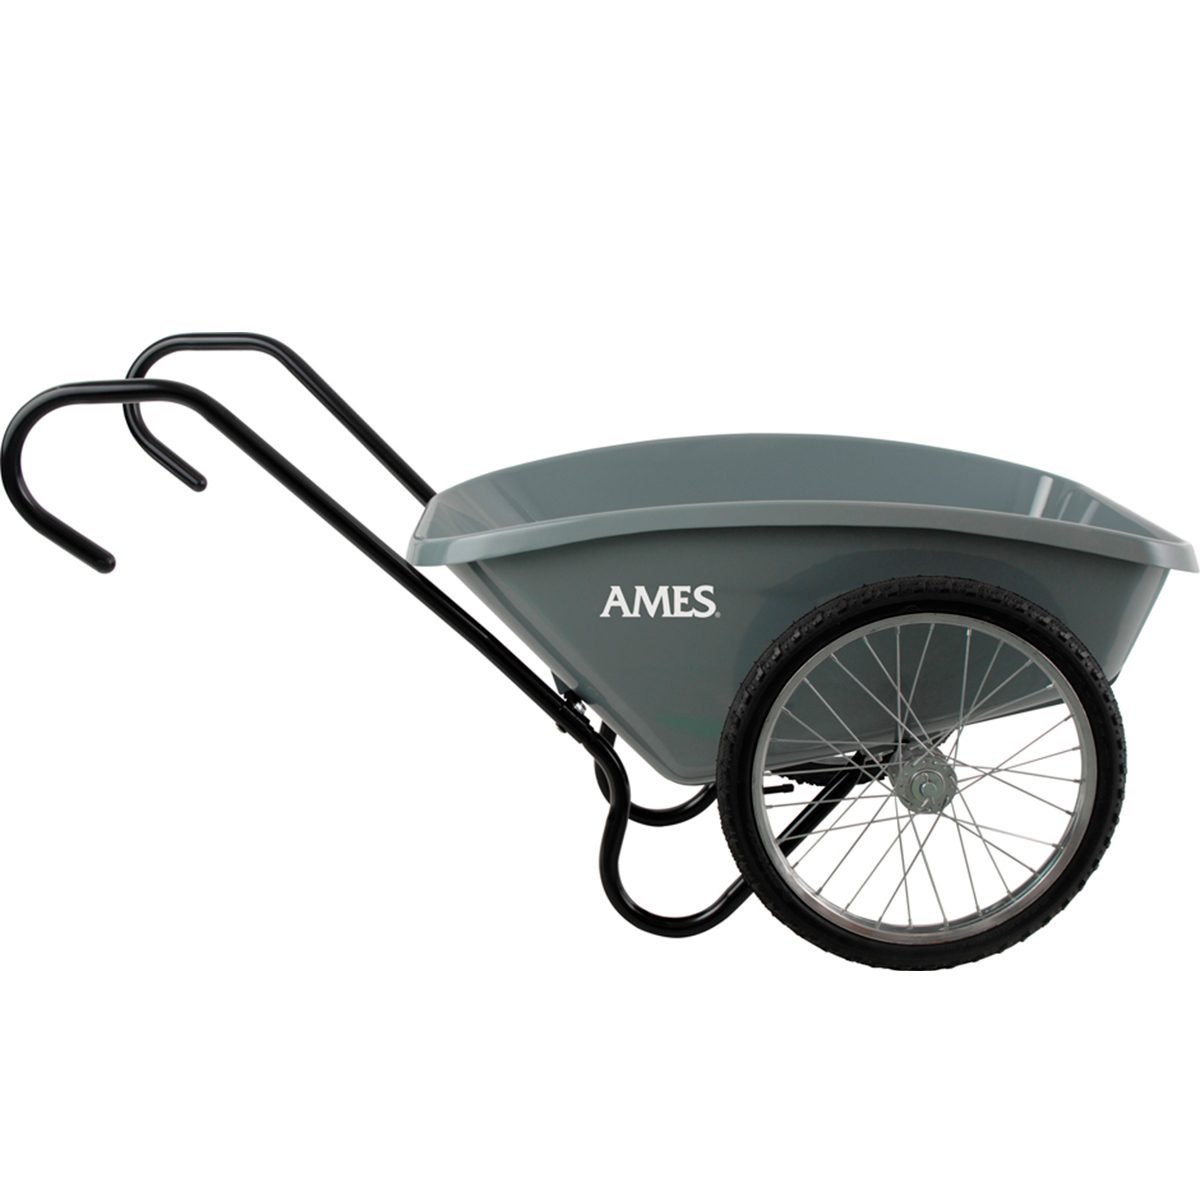 Ames Total Control 5 Cuft Garden Cart